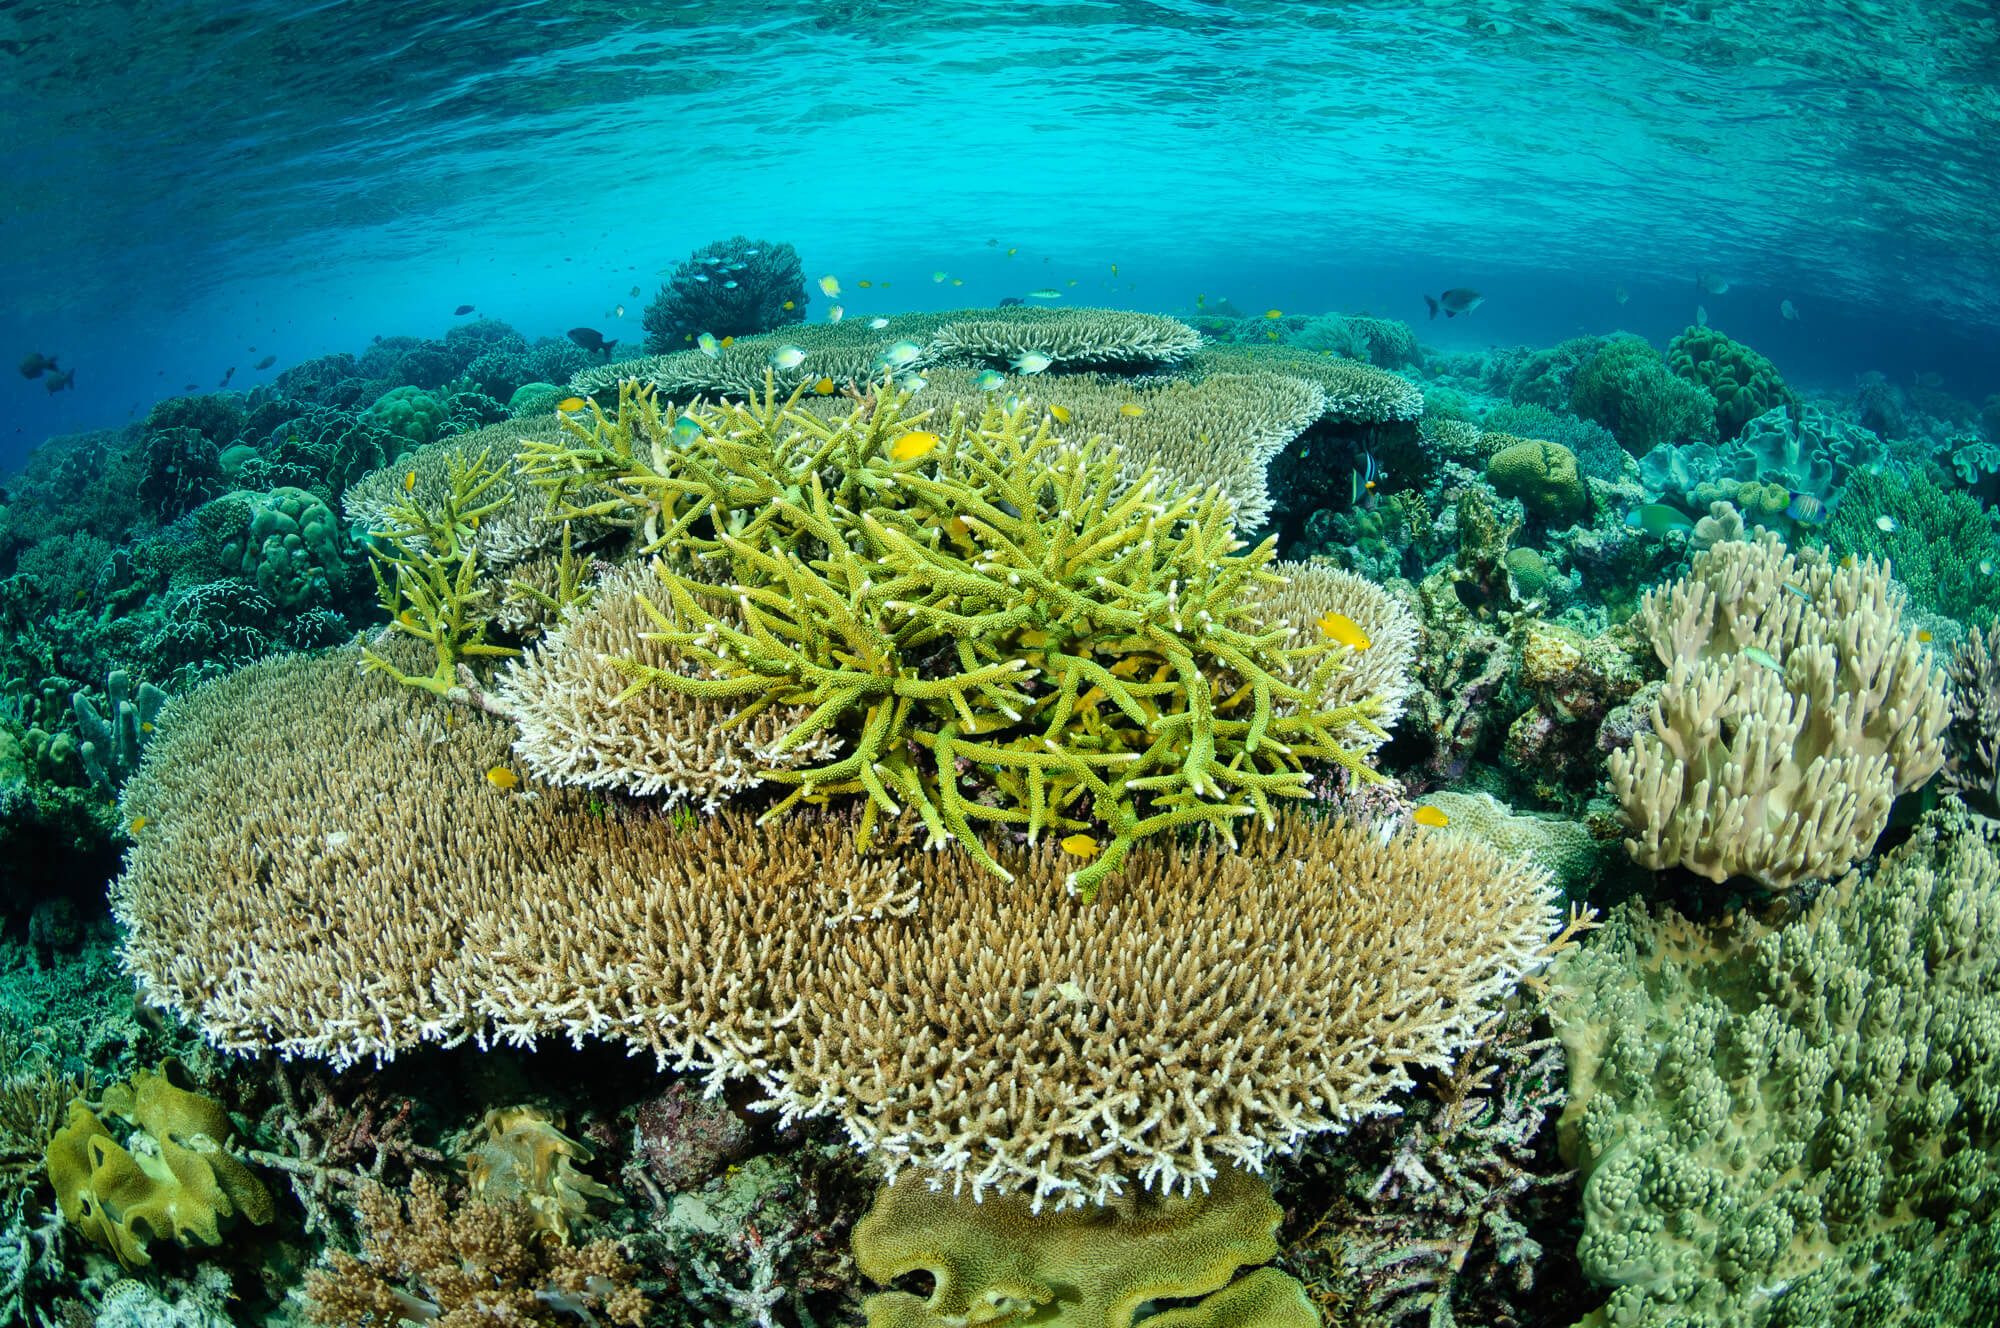 West Papua Misool Reef